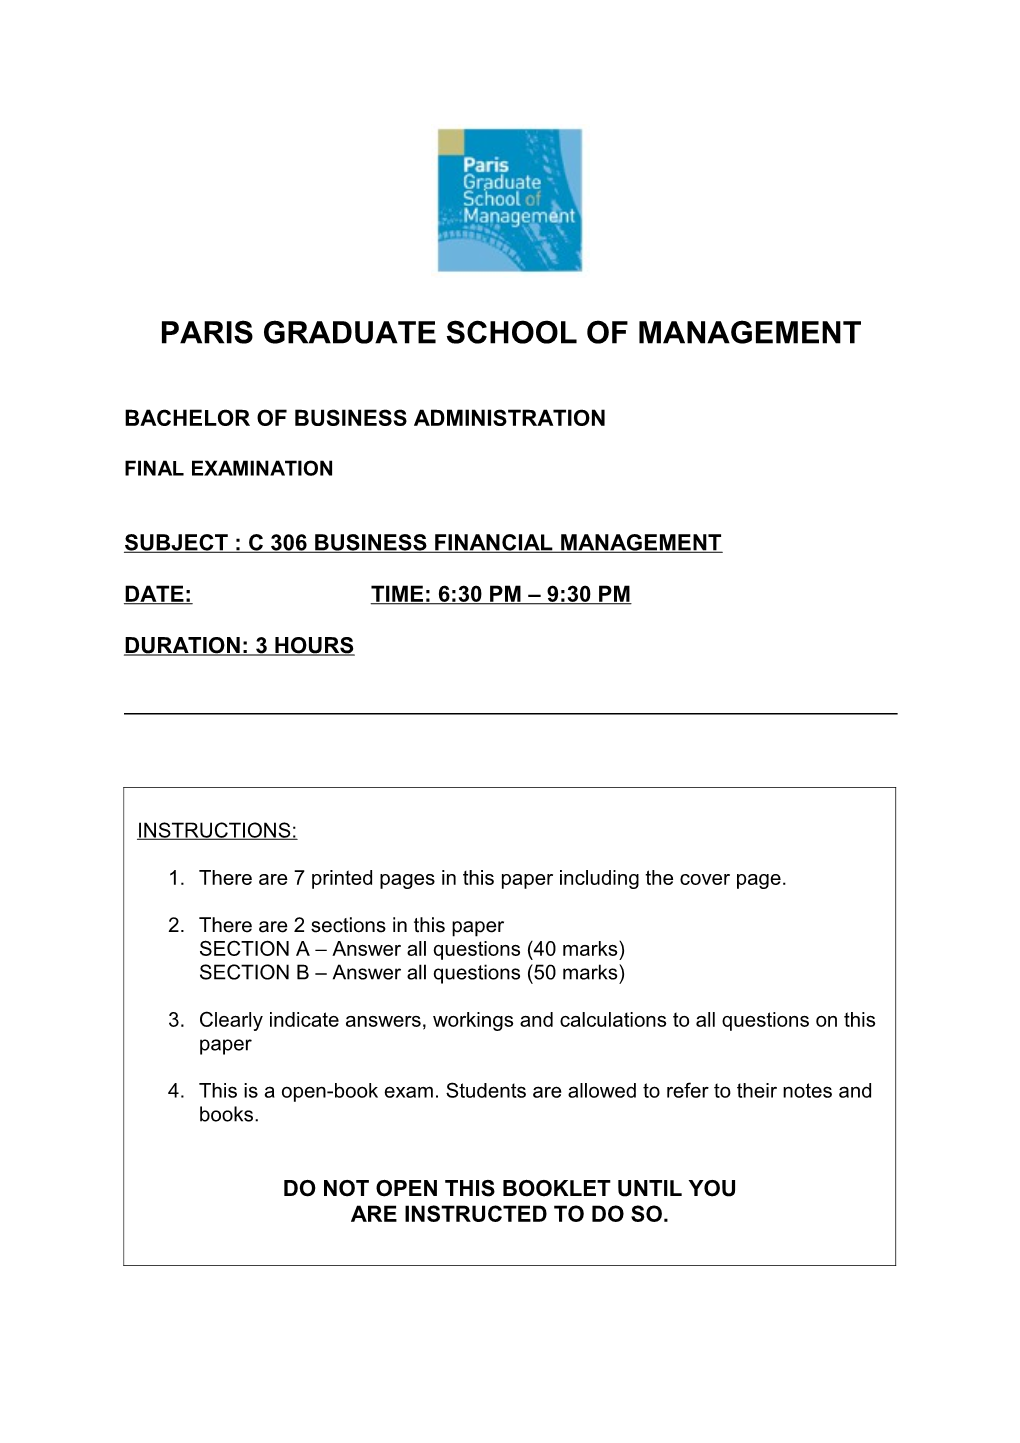 Parisgraduateschool of Management